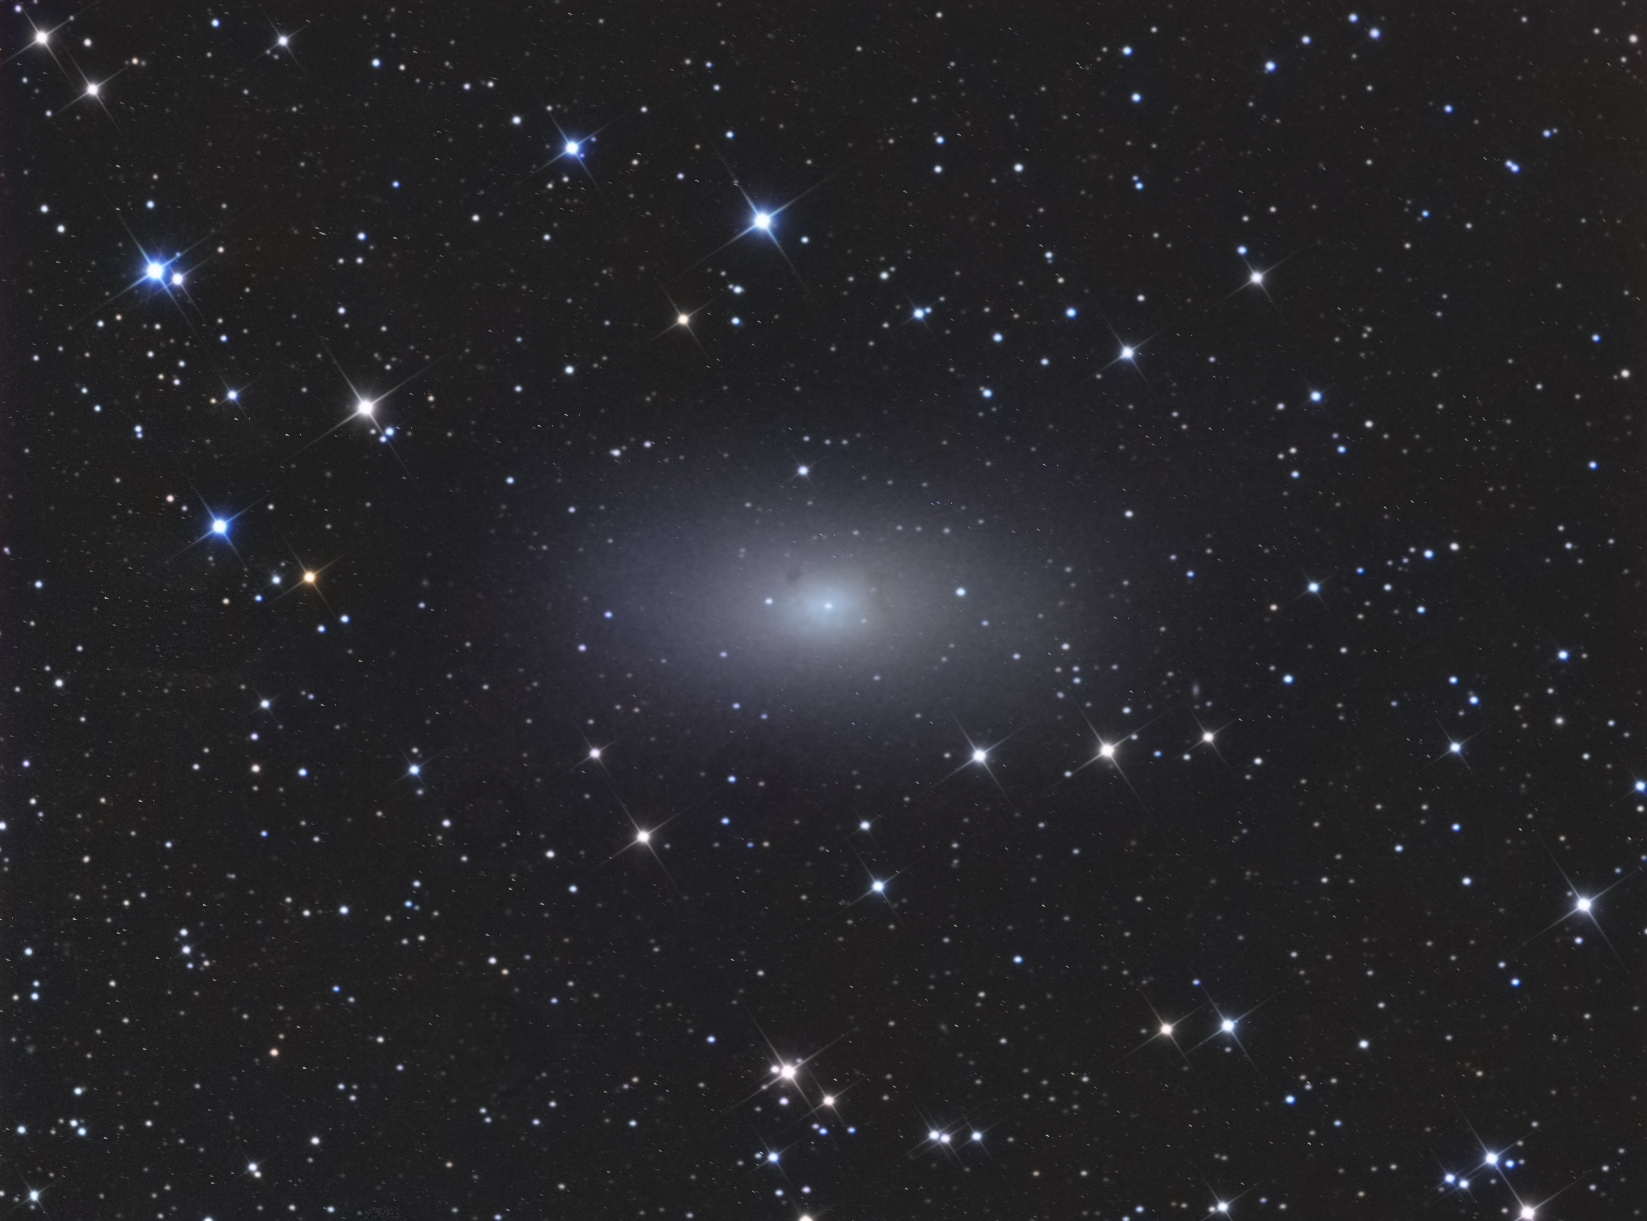 m110 - elliptical galaxy in Andromeda...